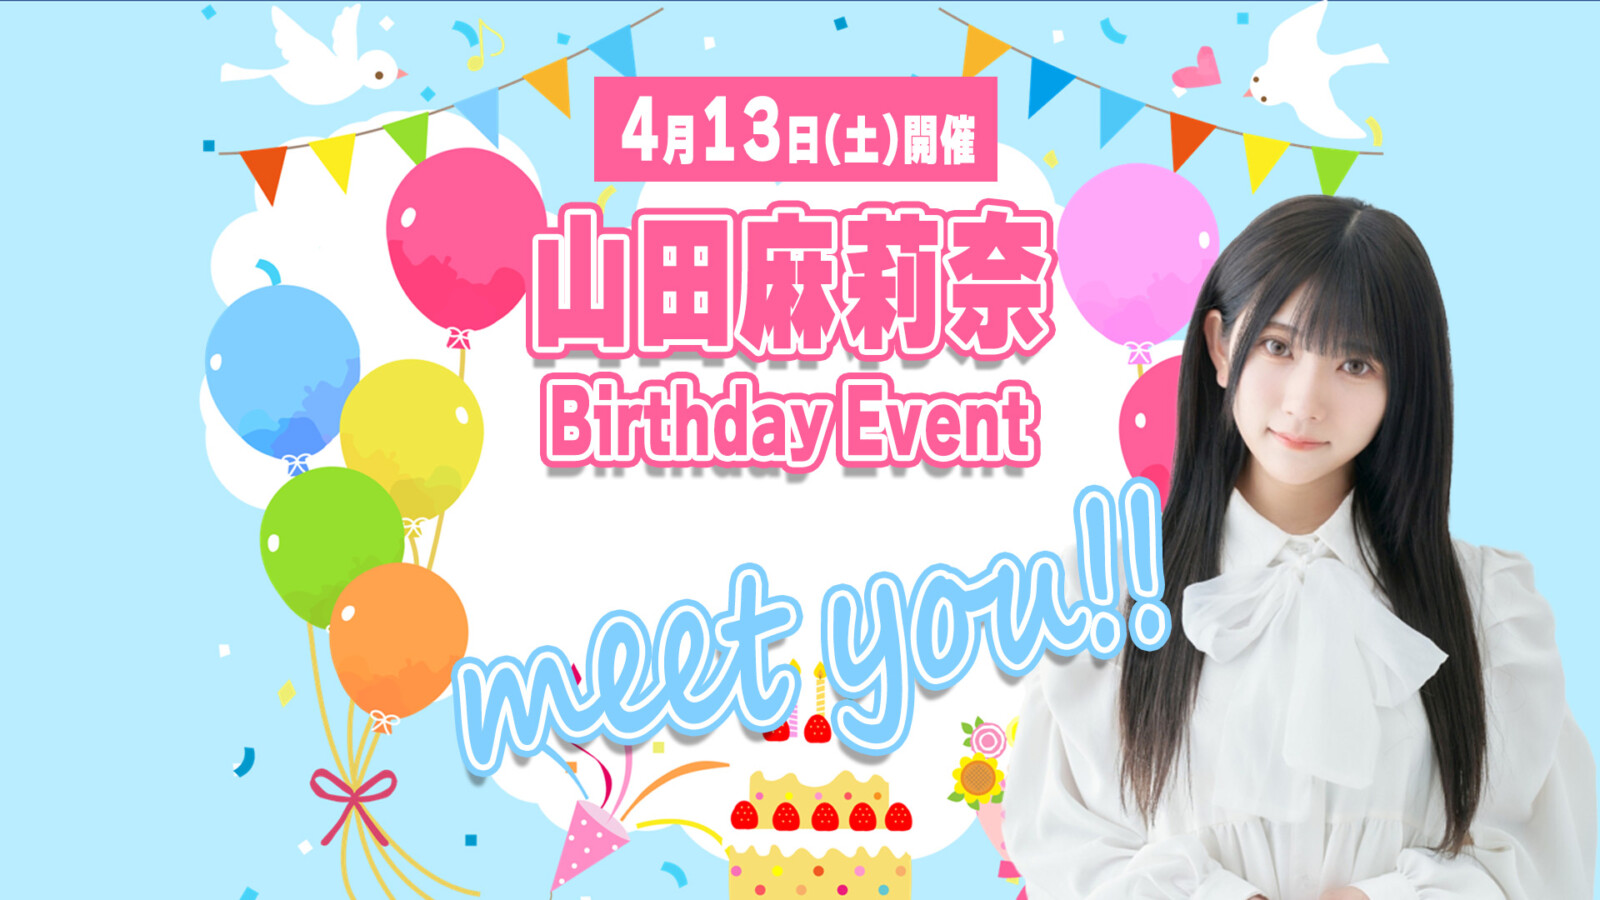 『山田麻莉奈 Birthday Event〜meet you!!〜』